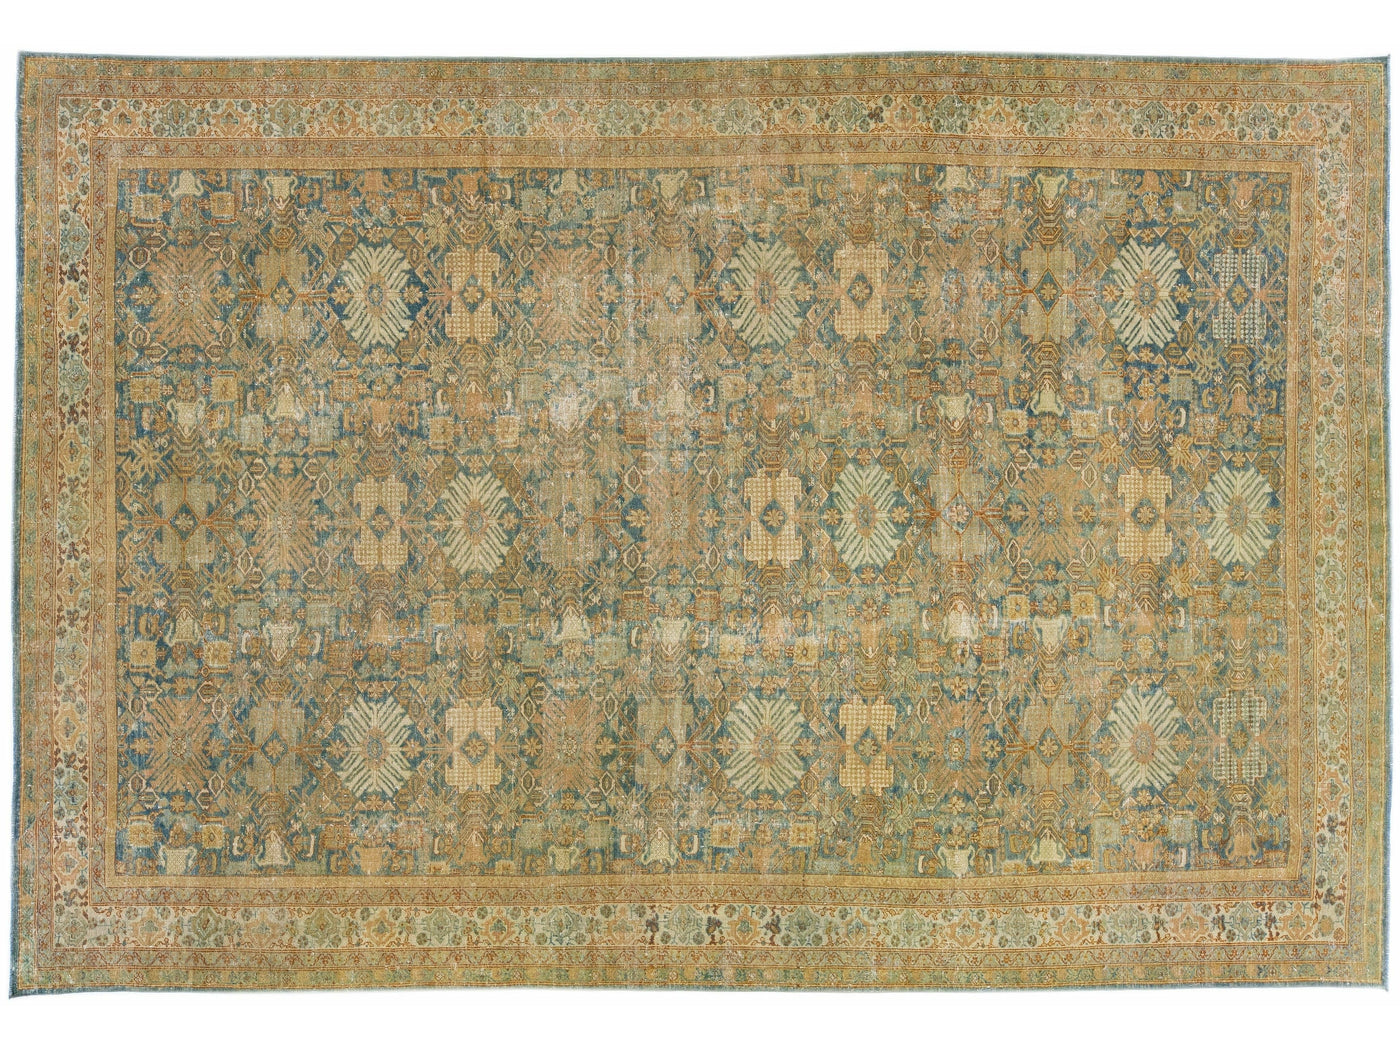 Antique Persian Mahal Orange & Blue Handmade Wool Rug With Floral Design